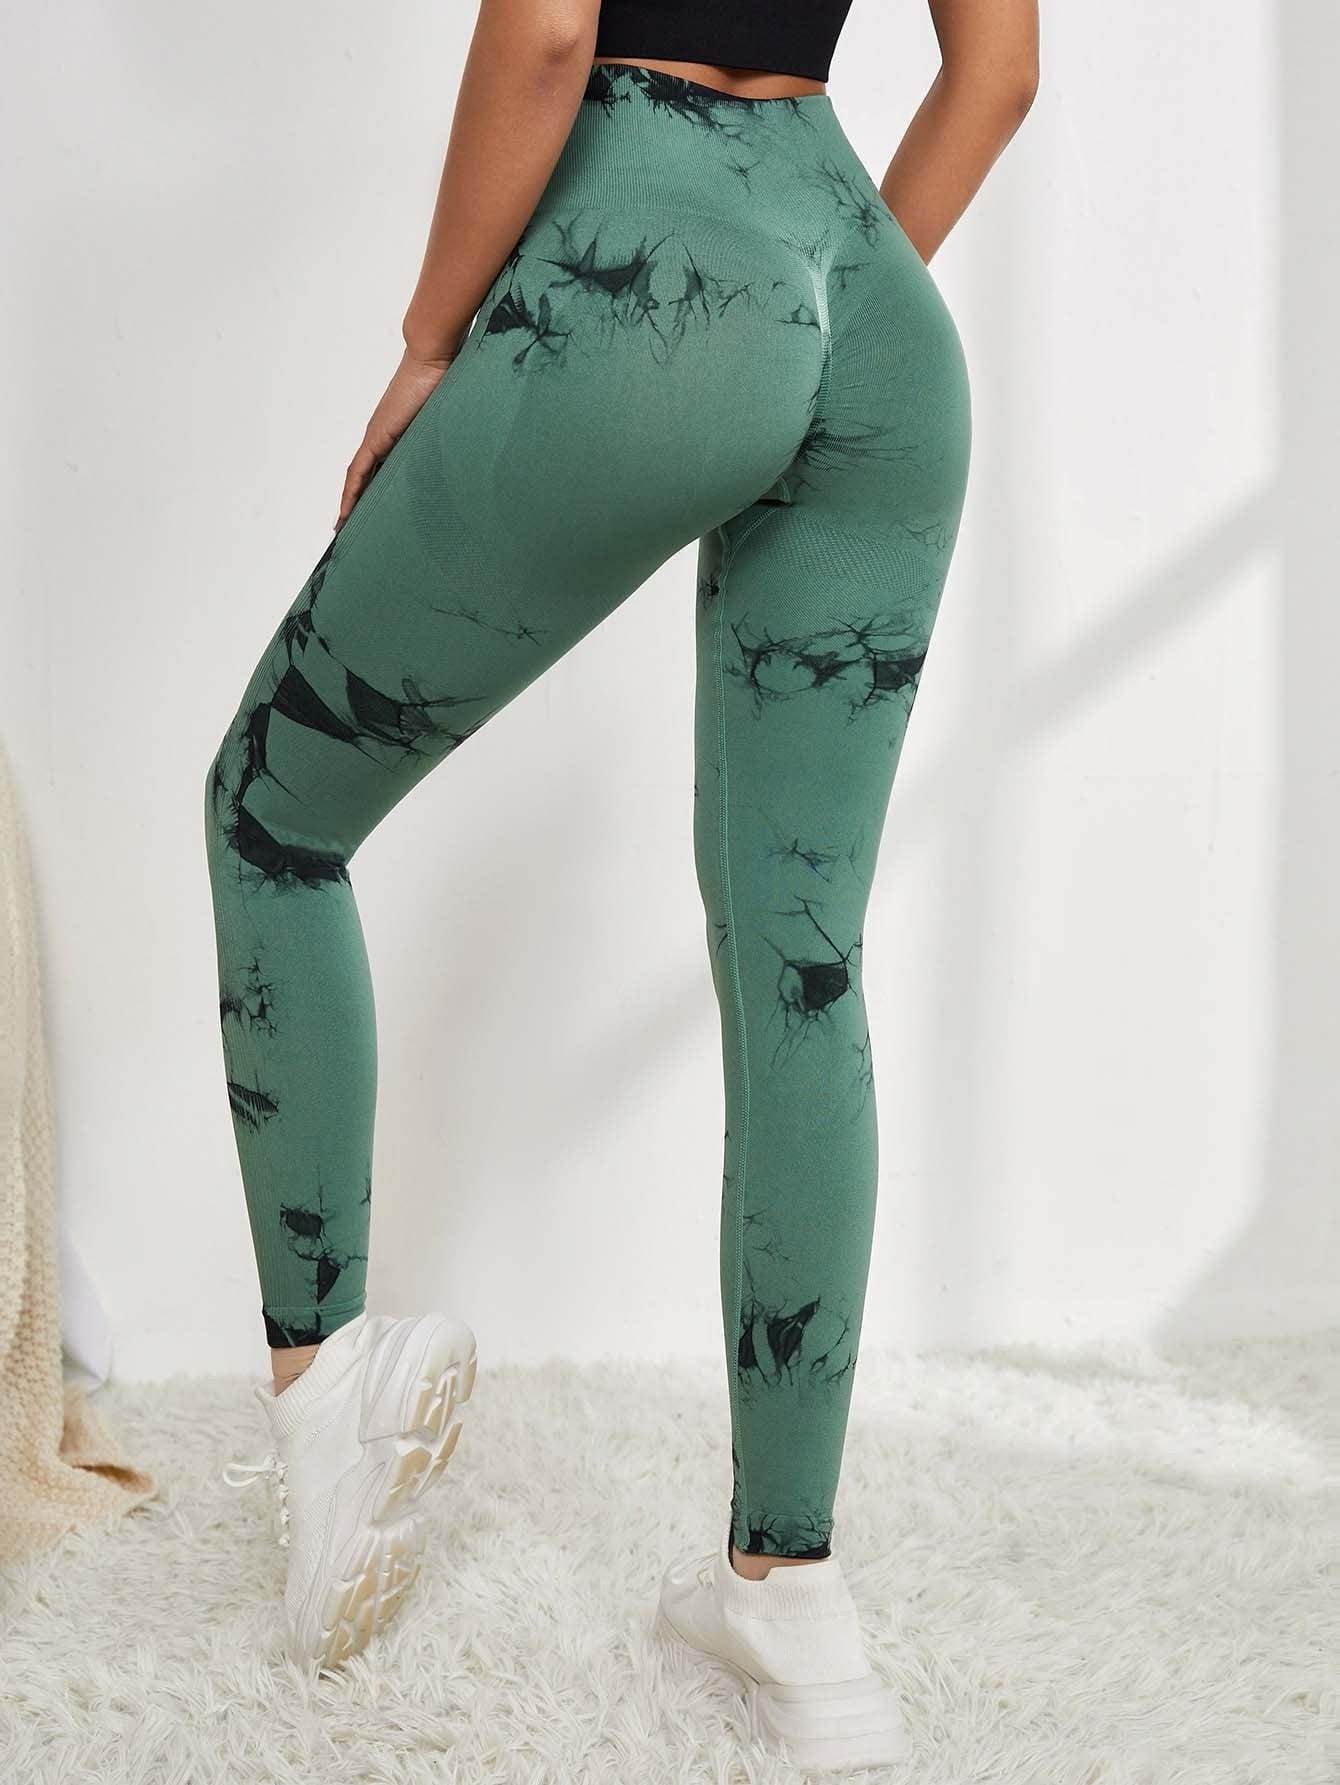 Elysmode Leggings Green / L High Waist Peach Hip Training Running Hip Lift Pants